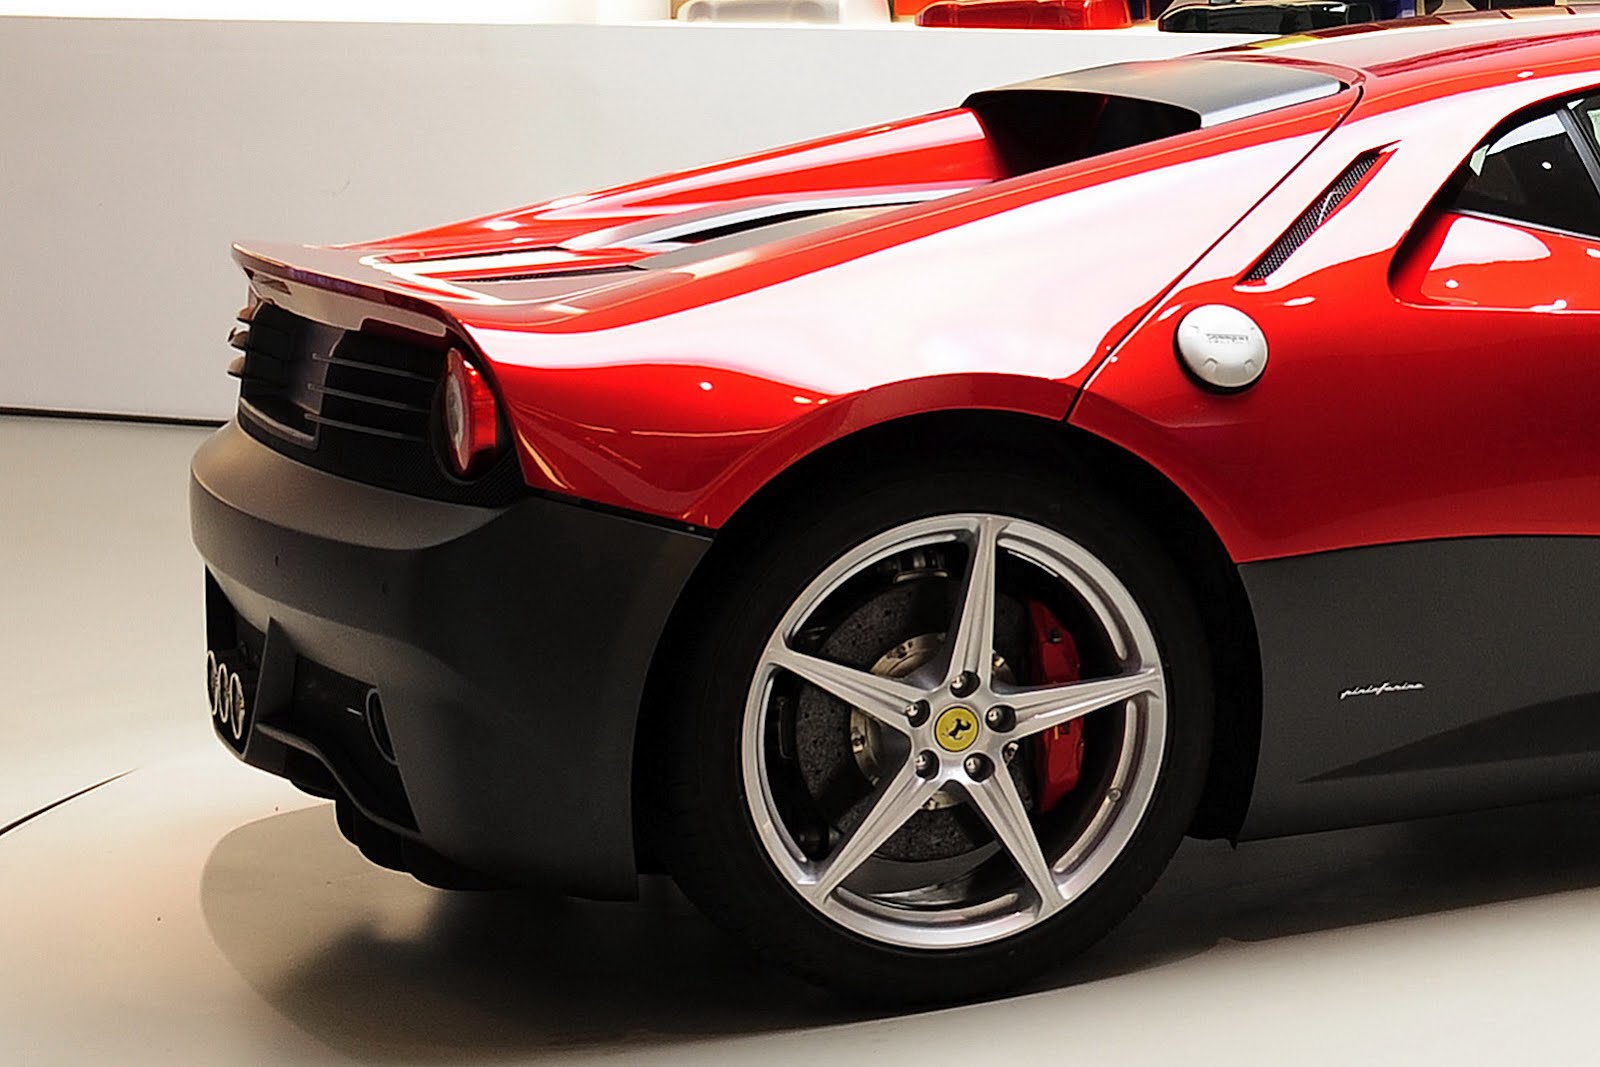 Ferrari SP12